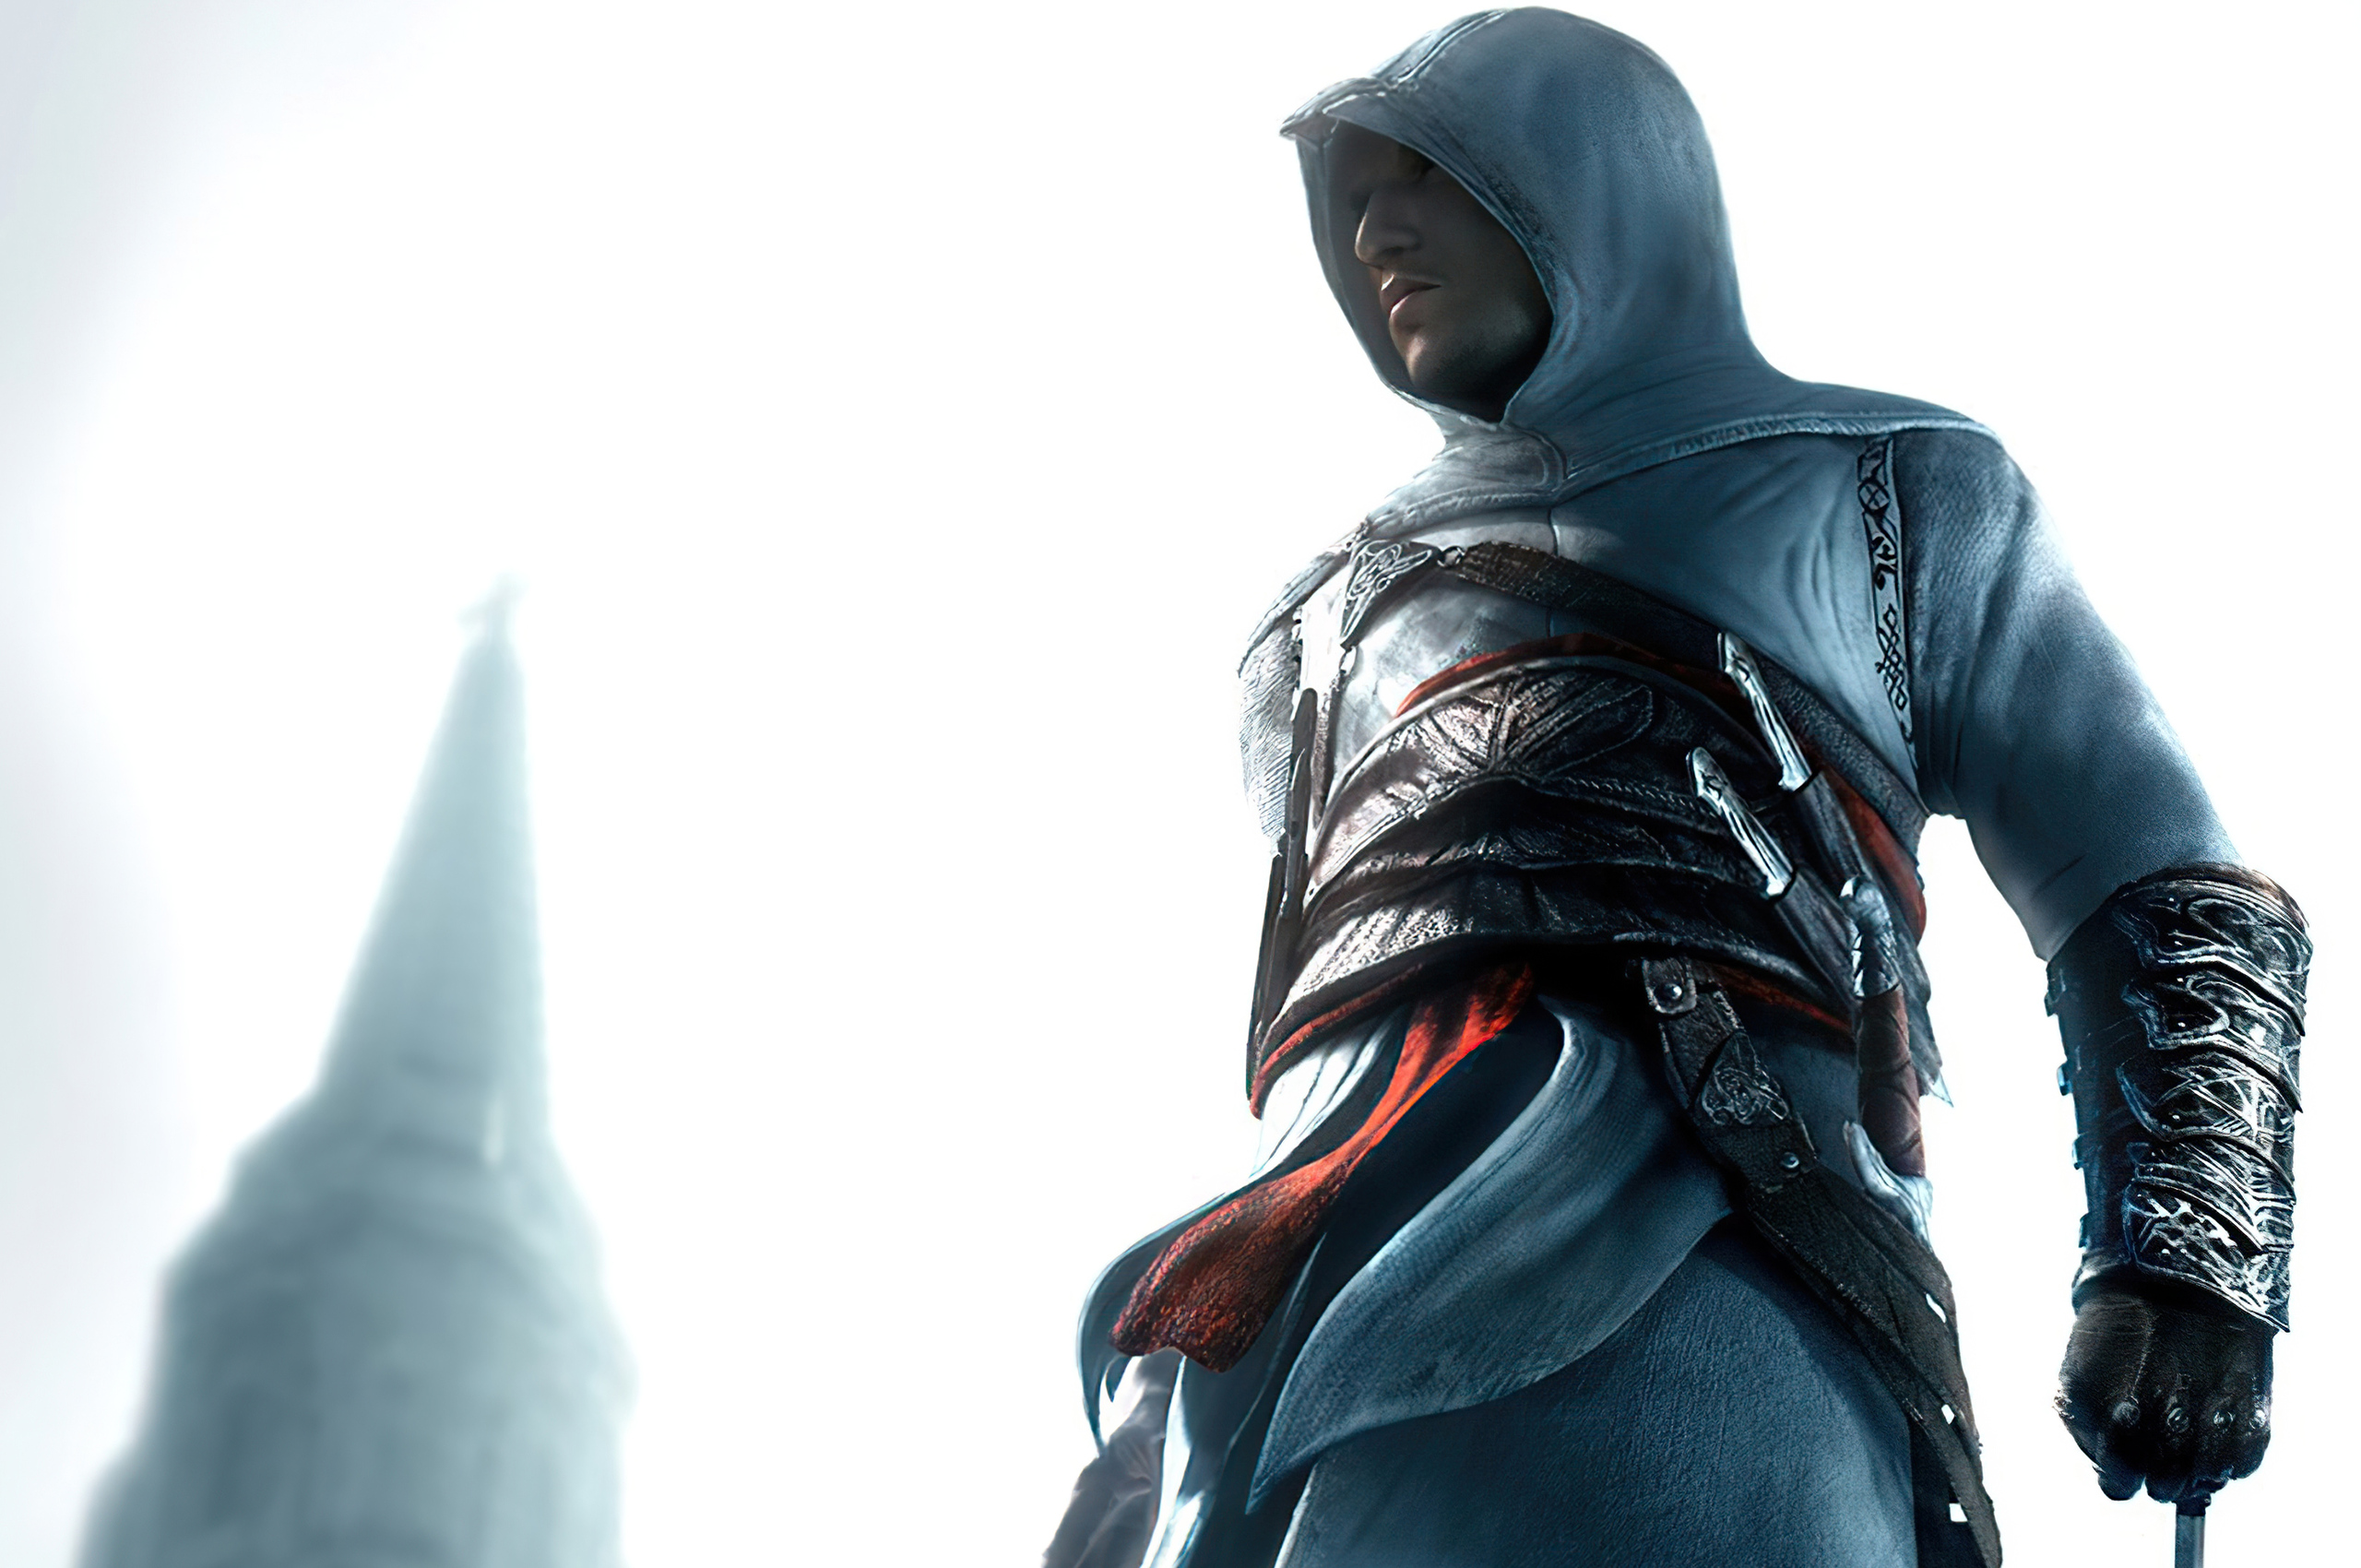 Ассасин крид джек. Самый первый ассасин. Assassin’s Creed (игра) 2007. Ассасин ориджинал. Assassin's Creed first.